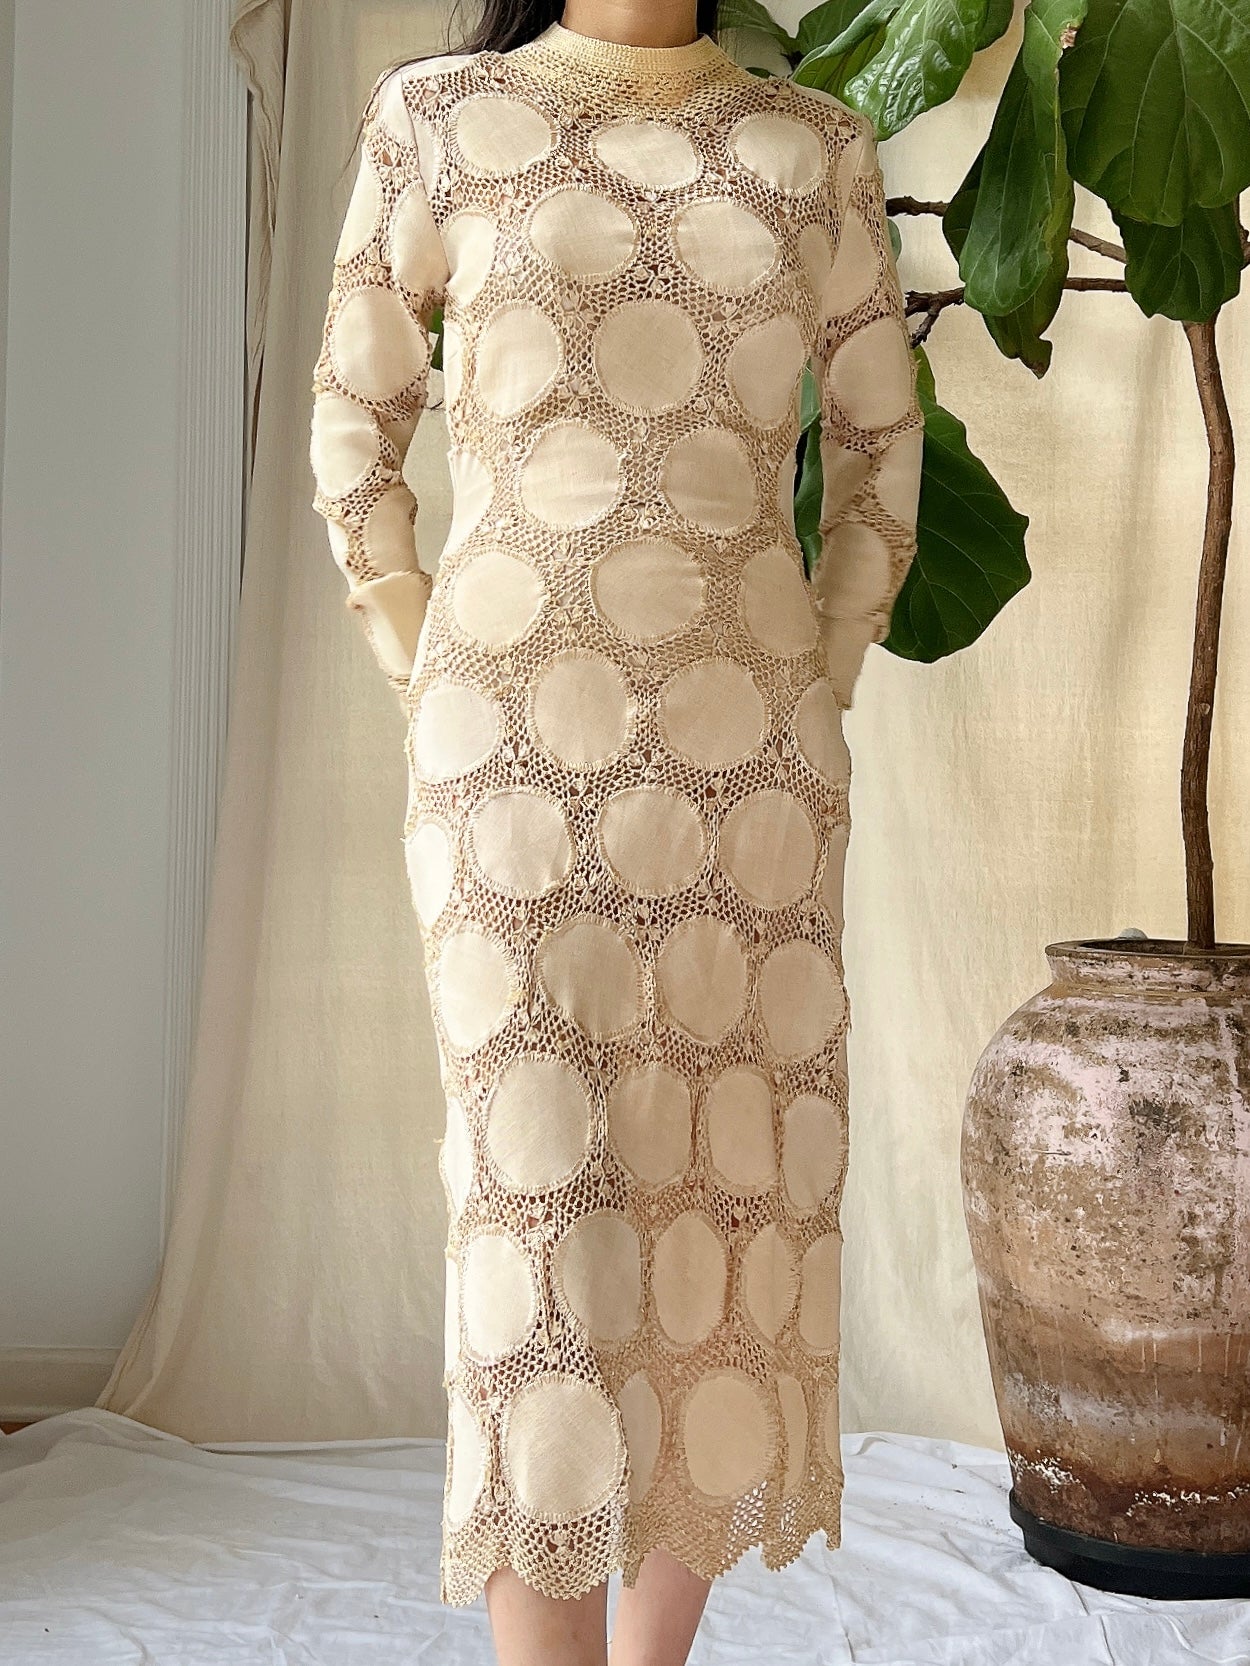 Vintage Crochet Circle Patterned Dress - XS